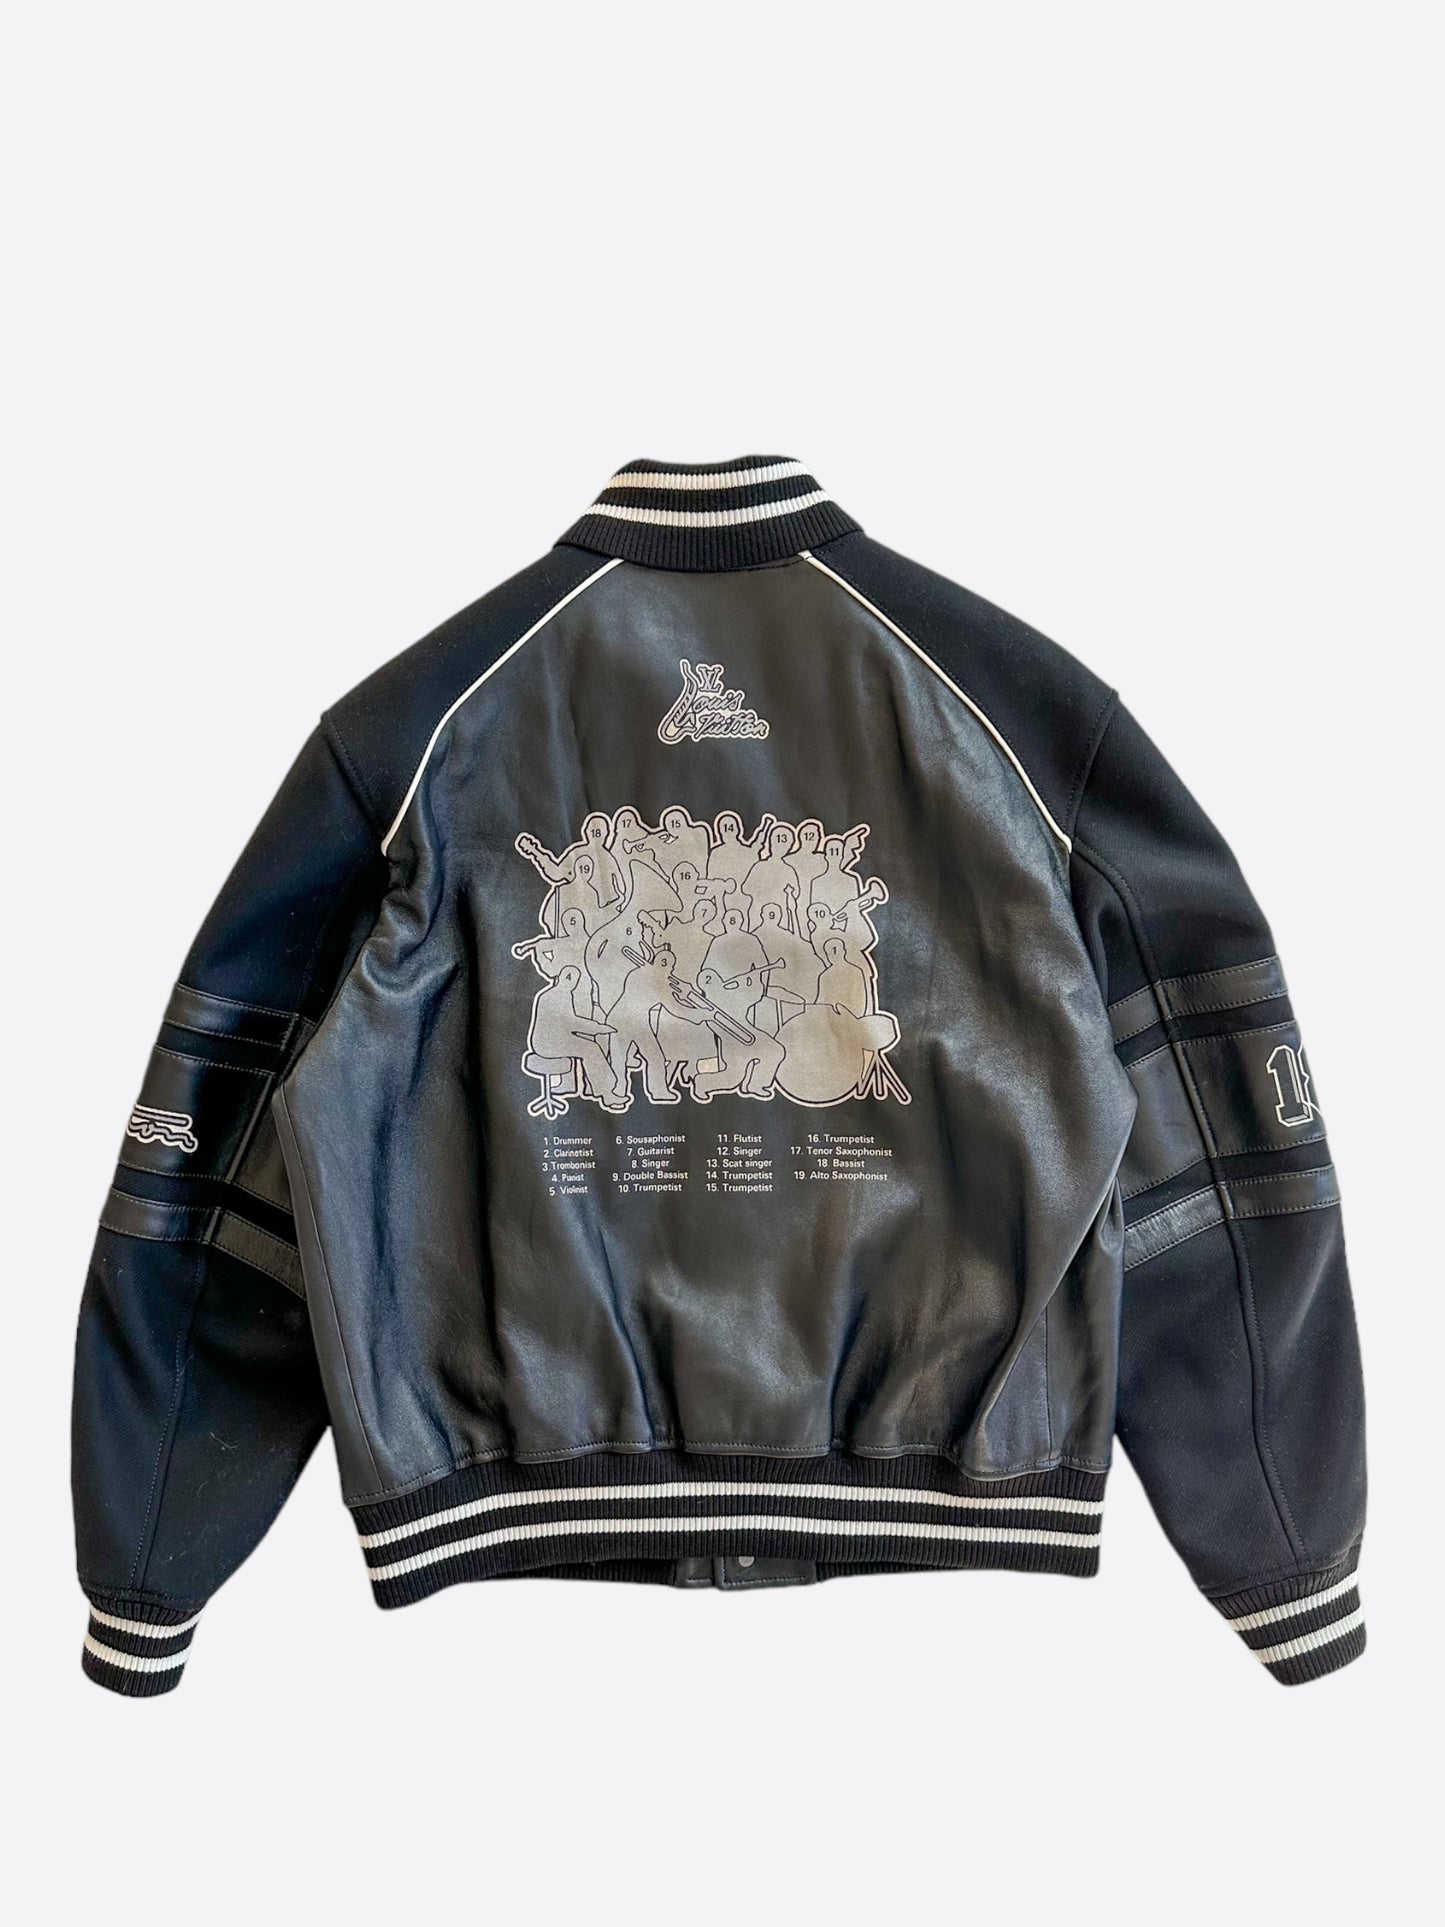 Louis Vuitton Black Leather Varsity Jacket